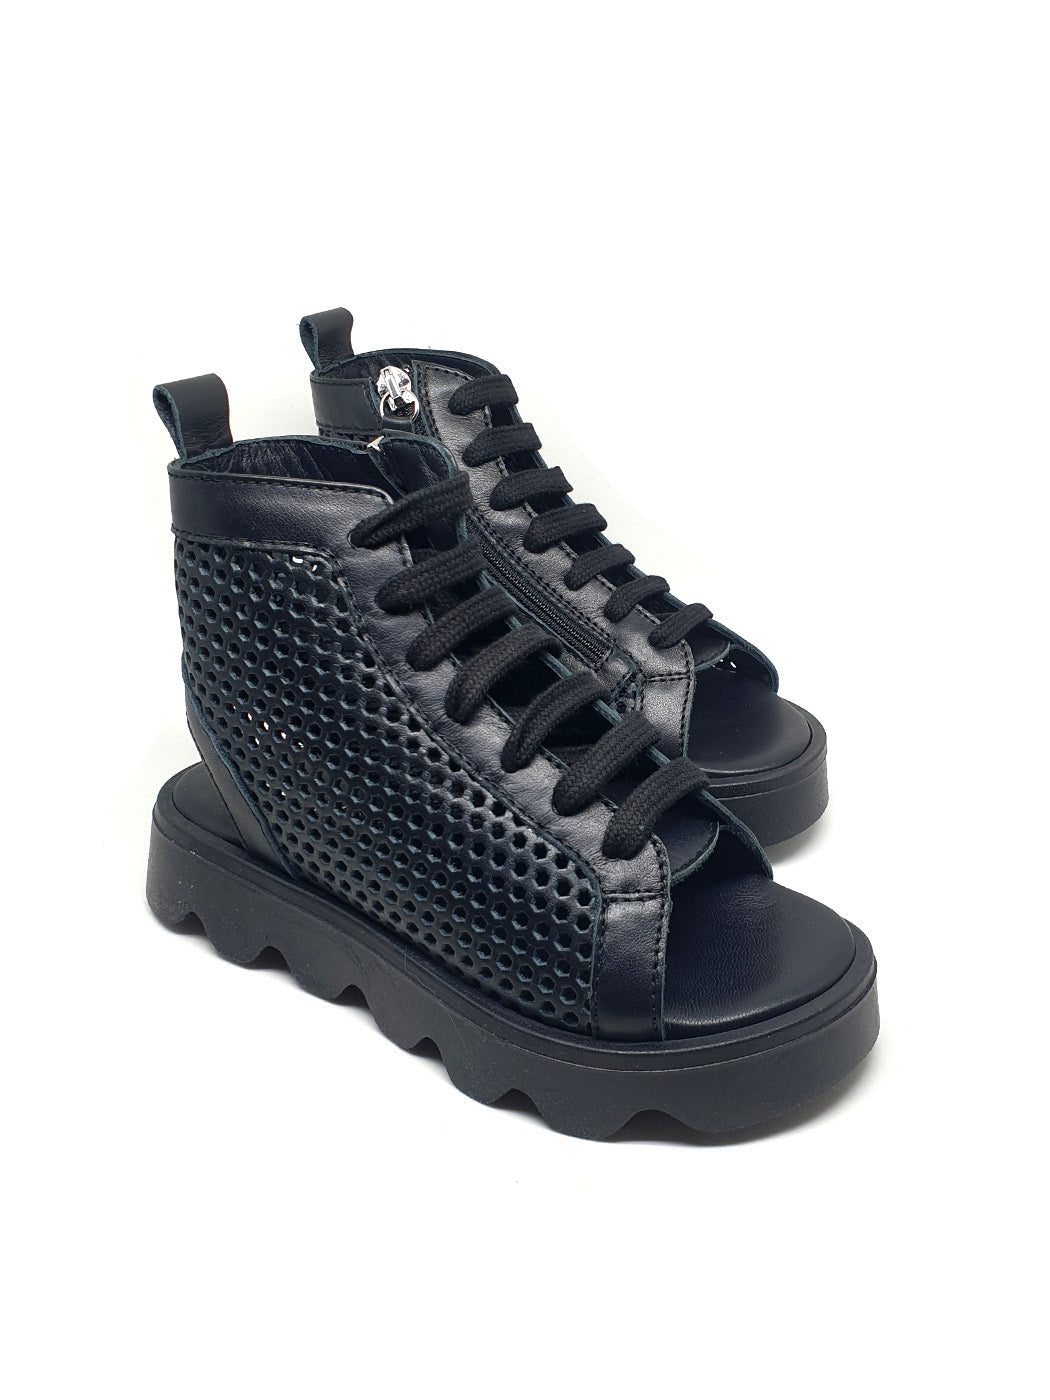 TWINSET kid's leather sandal black - 221GCJ048